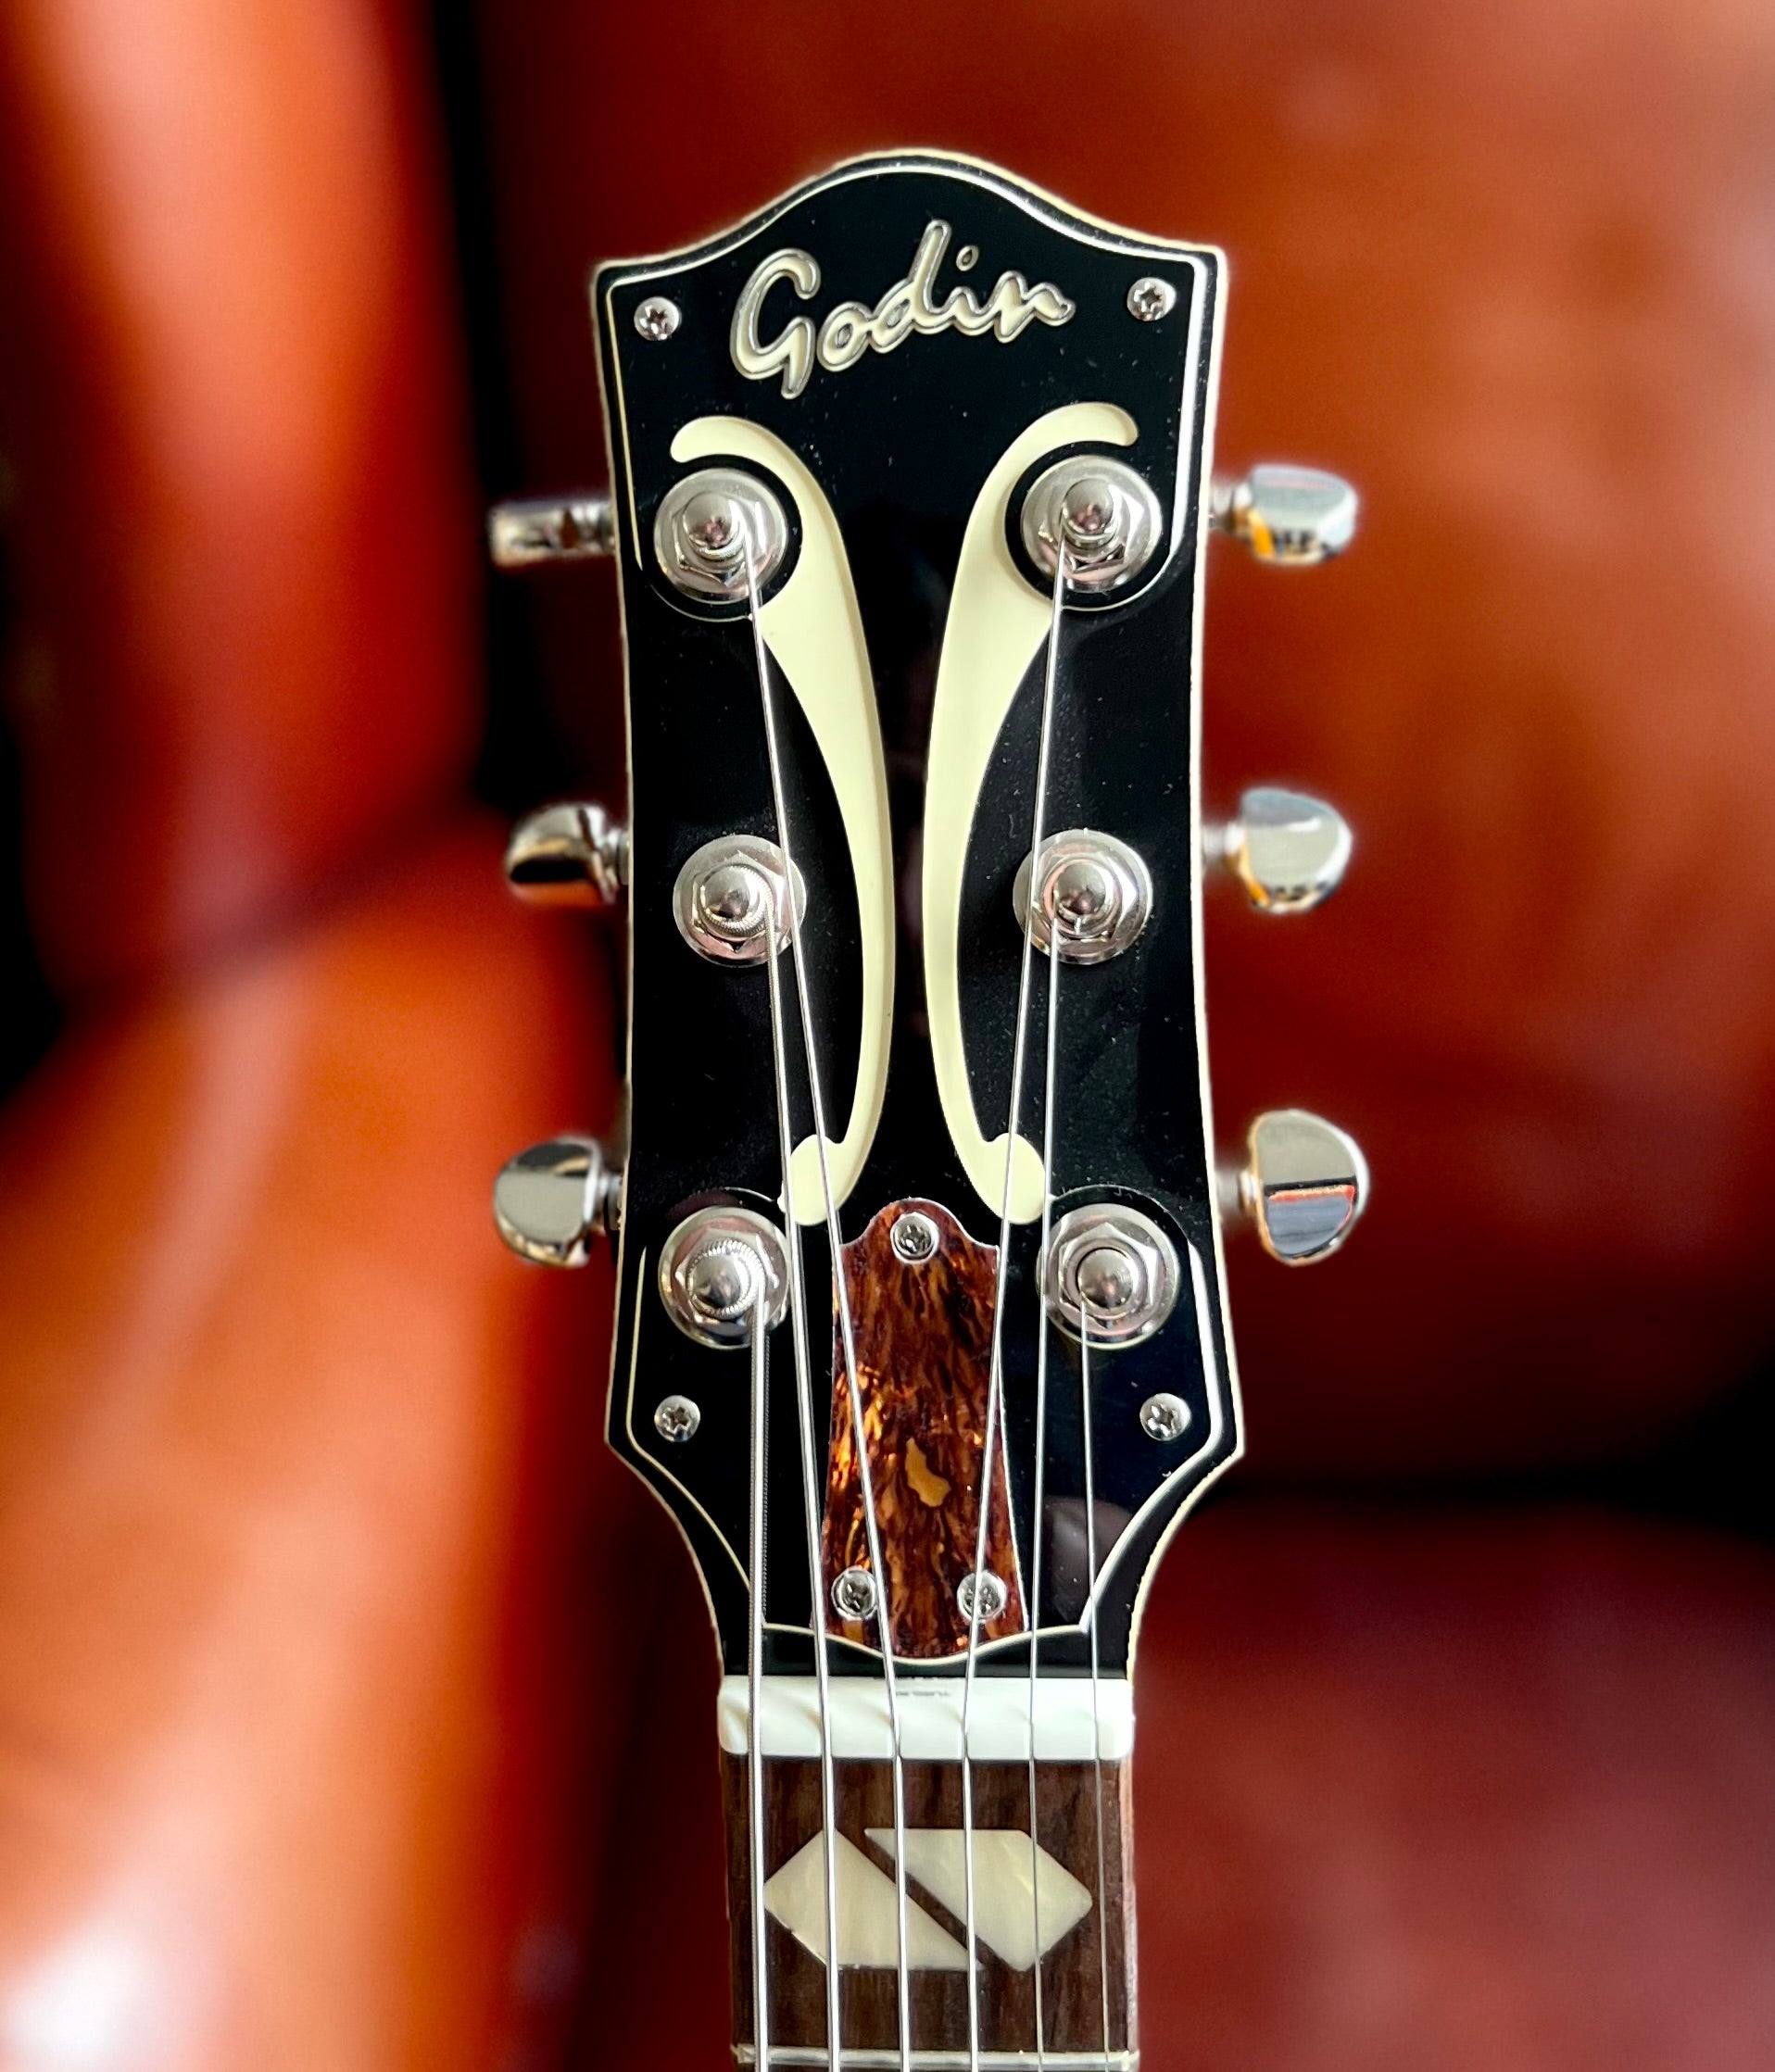 Godin 5th Avenue Jumbo P-Rail Semi-Acoustic Guitar ~ Harvest Gold, Electric Guitar for sale at Richards Guitars.